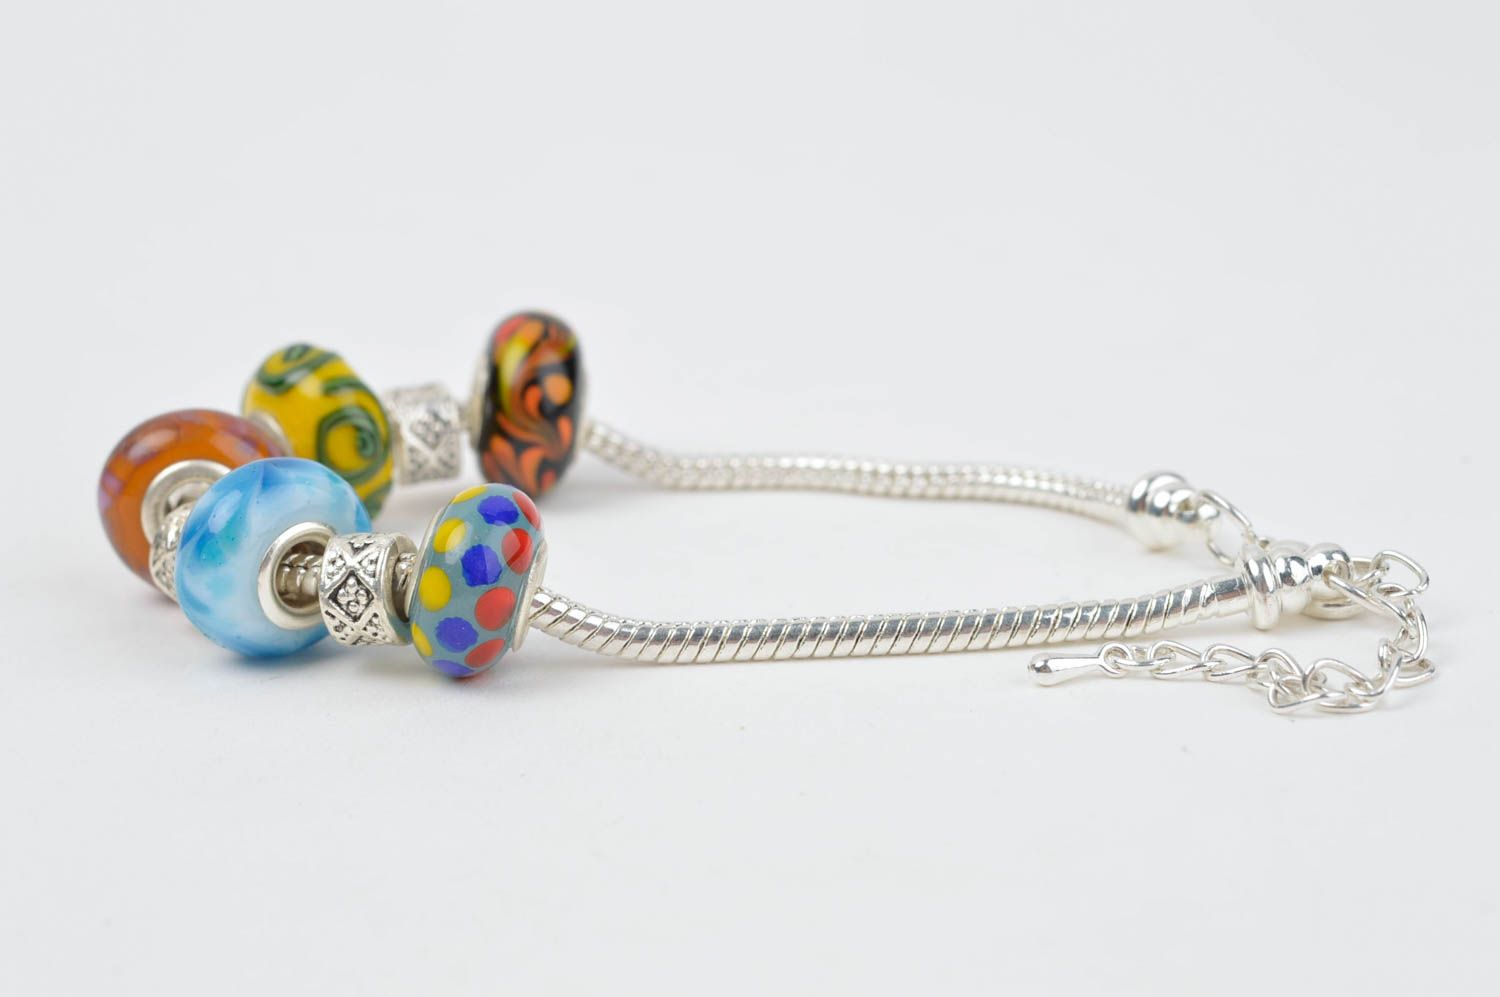 Stylish handmade wrist bracelet designs glass bead bracelet artisan jewelry photo 3